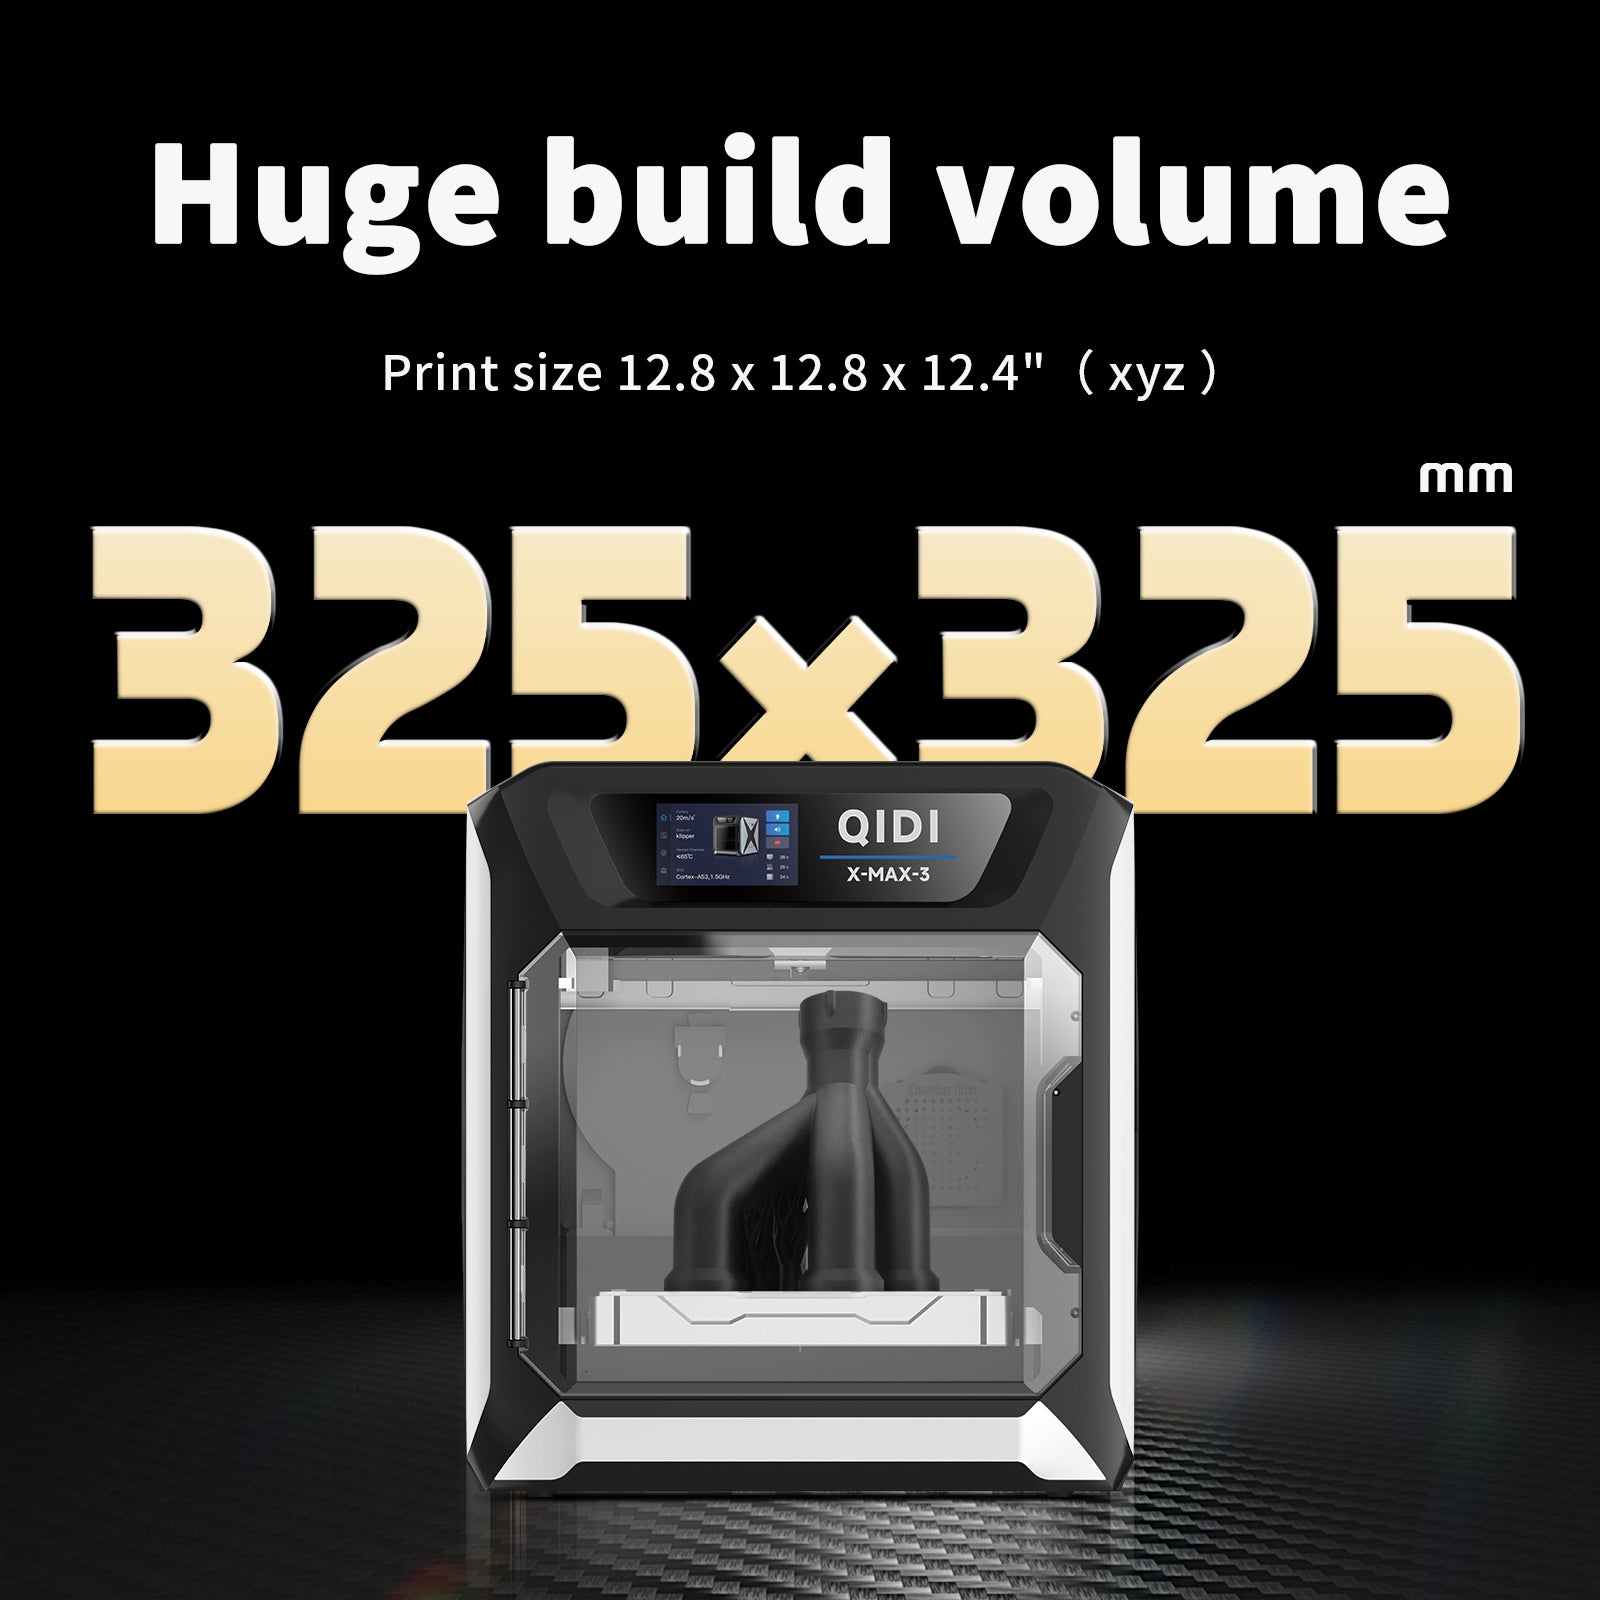 large build volume 3d printer for business needs